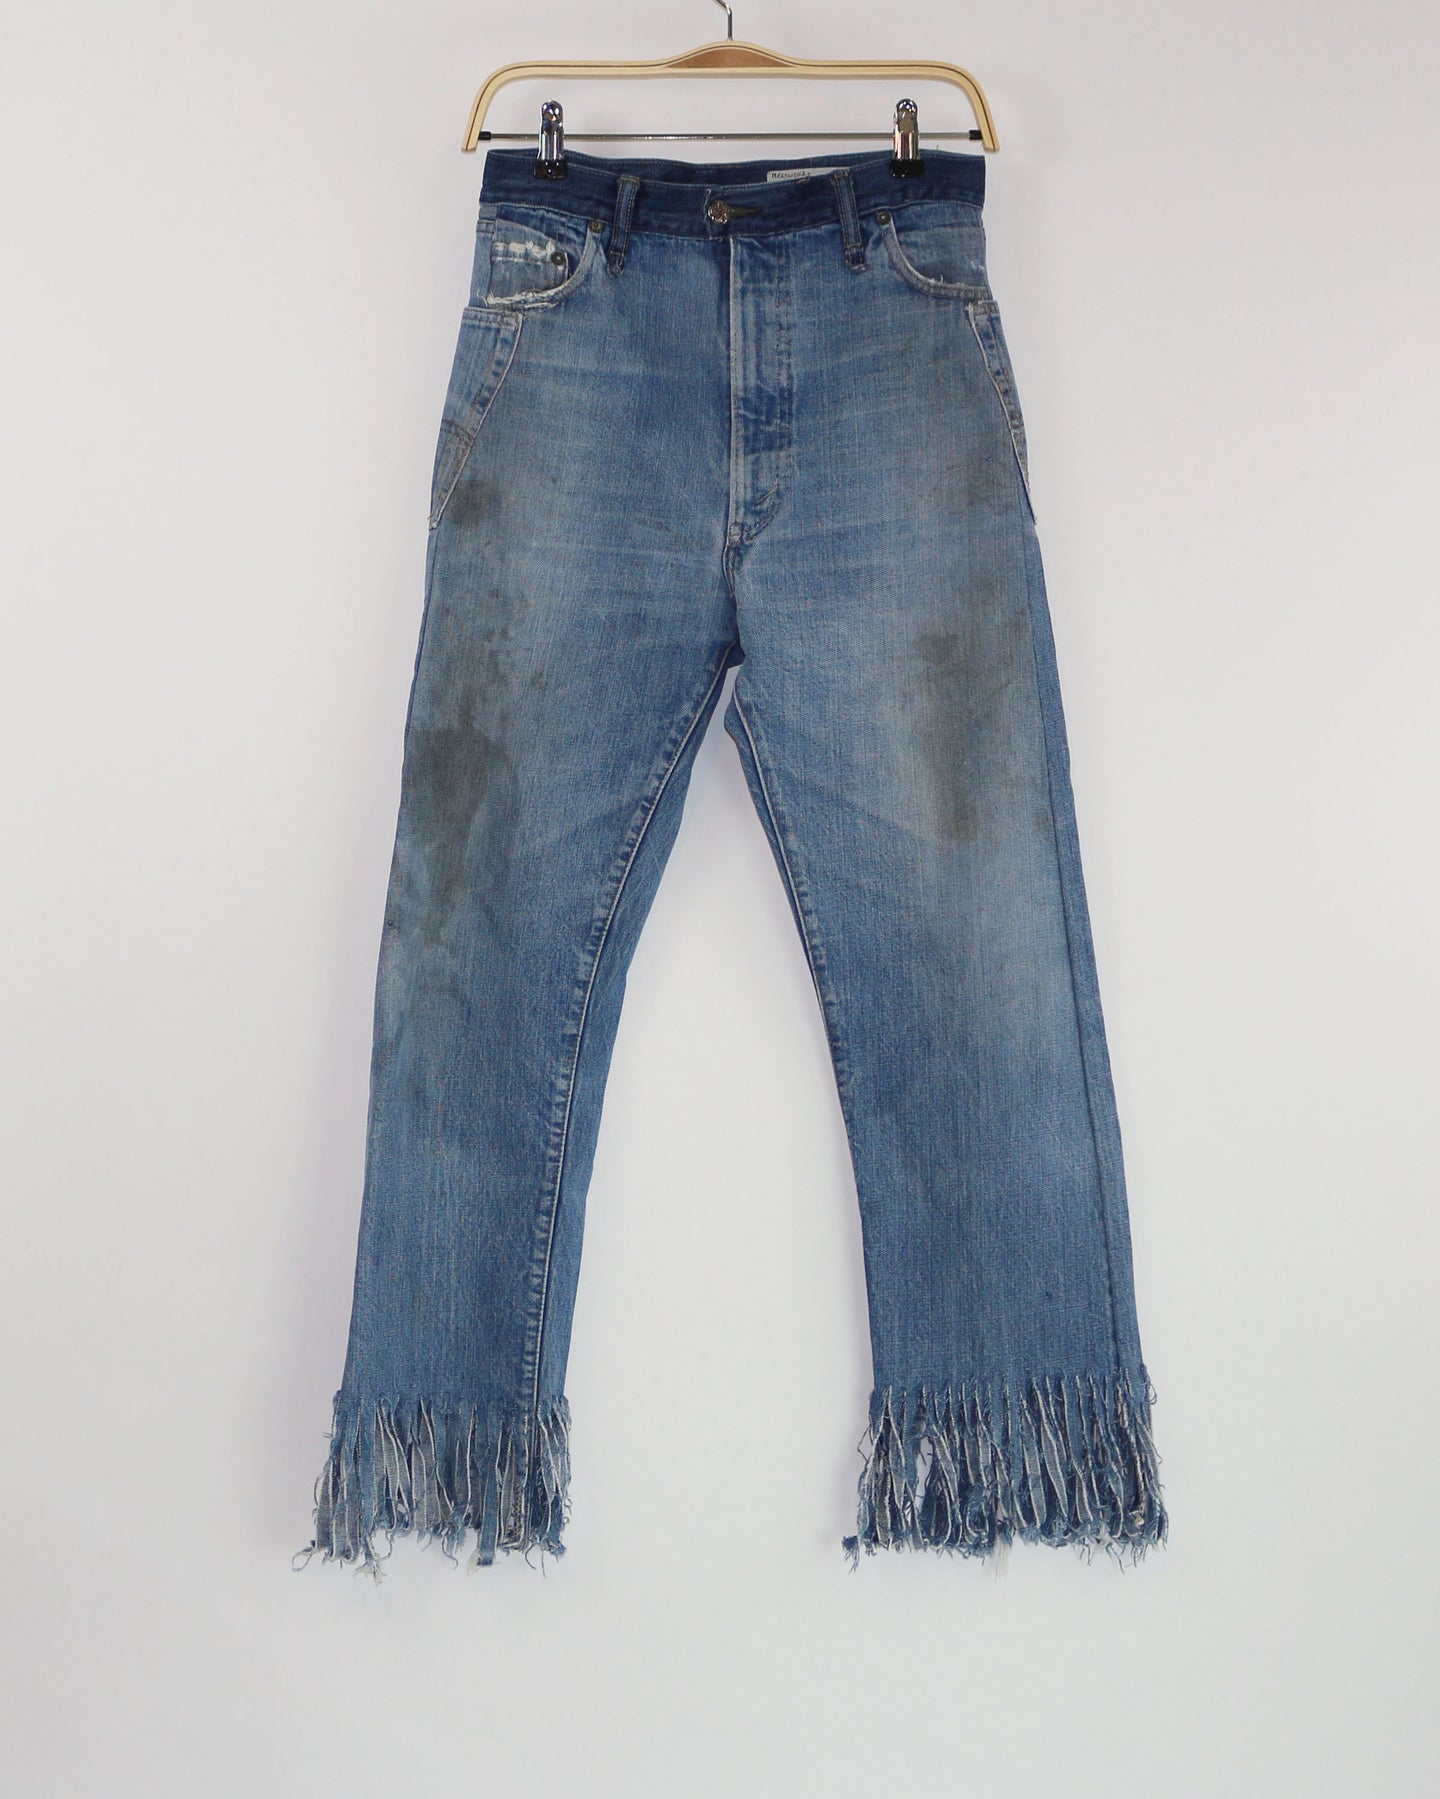 Reworked Fringe-hem Women's Jeans, Size 26/27